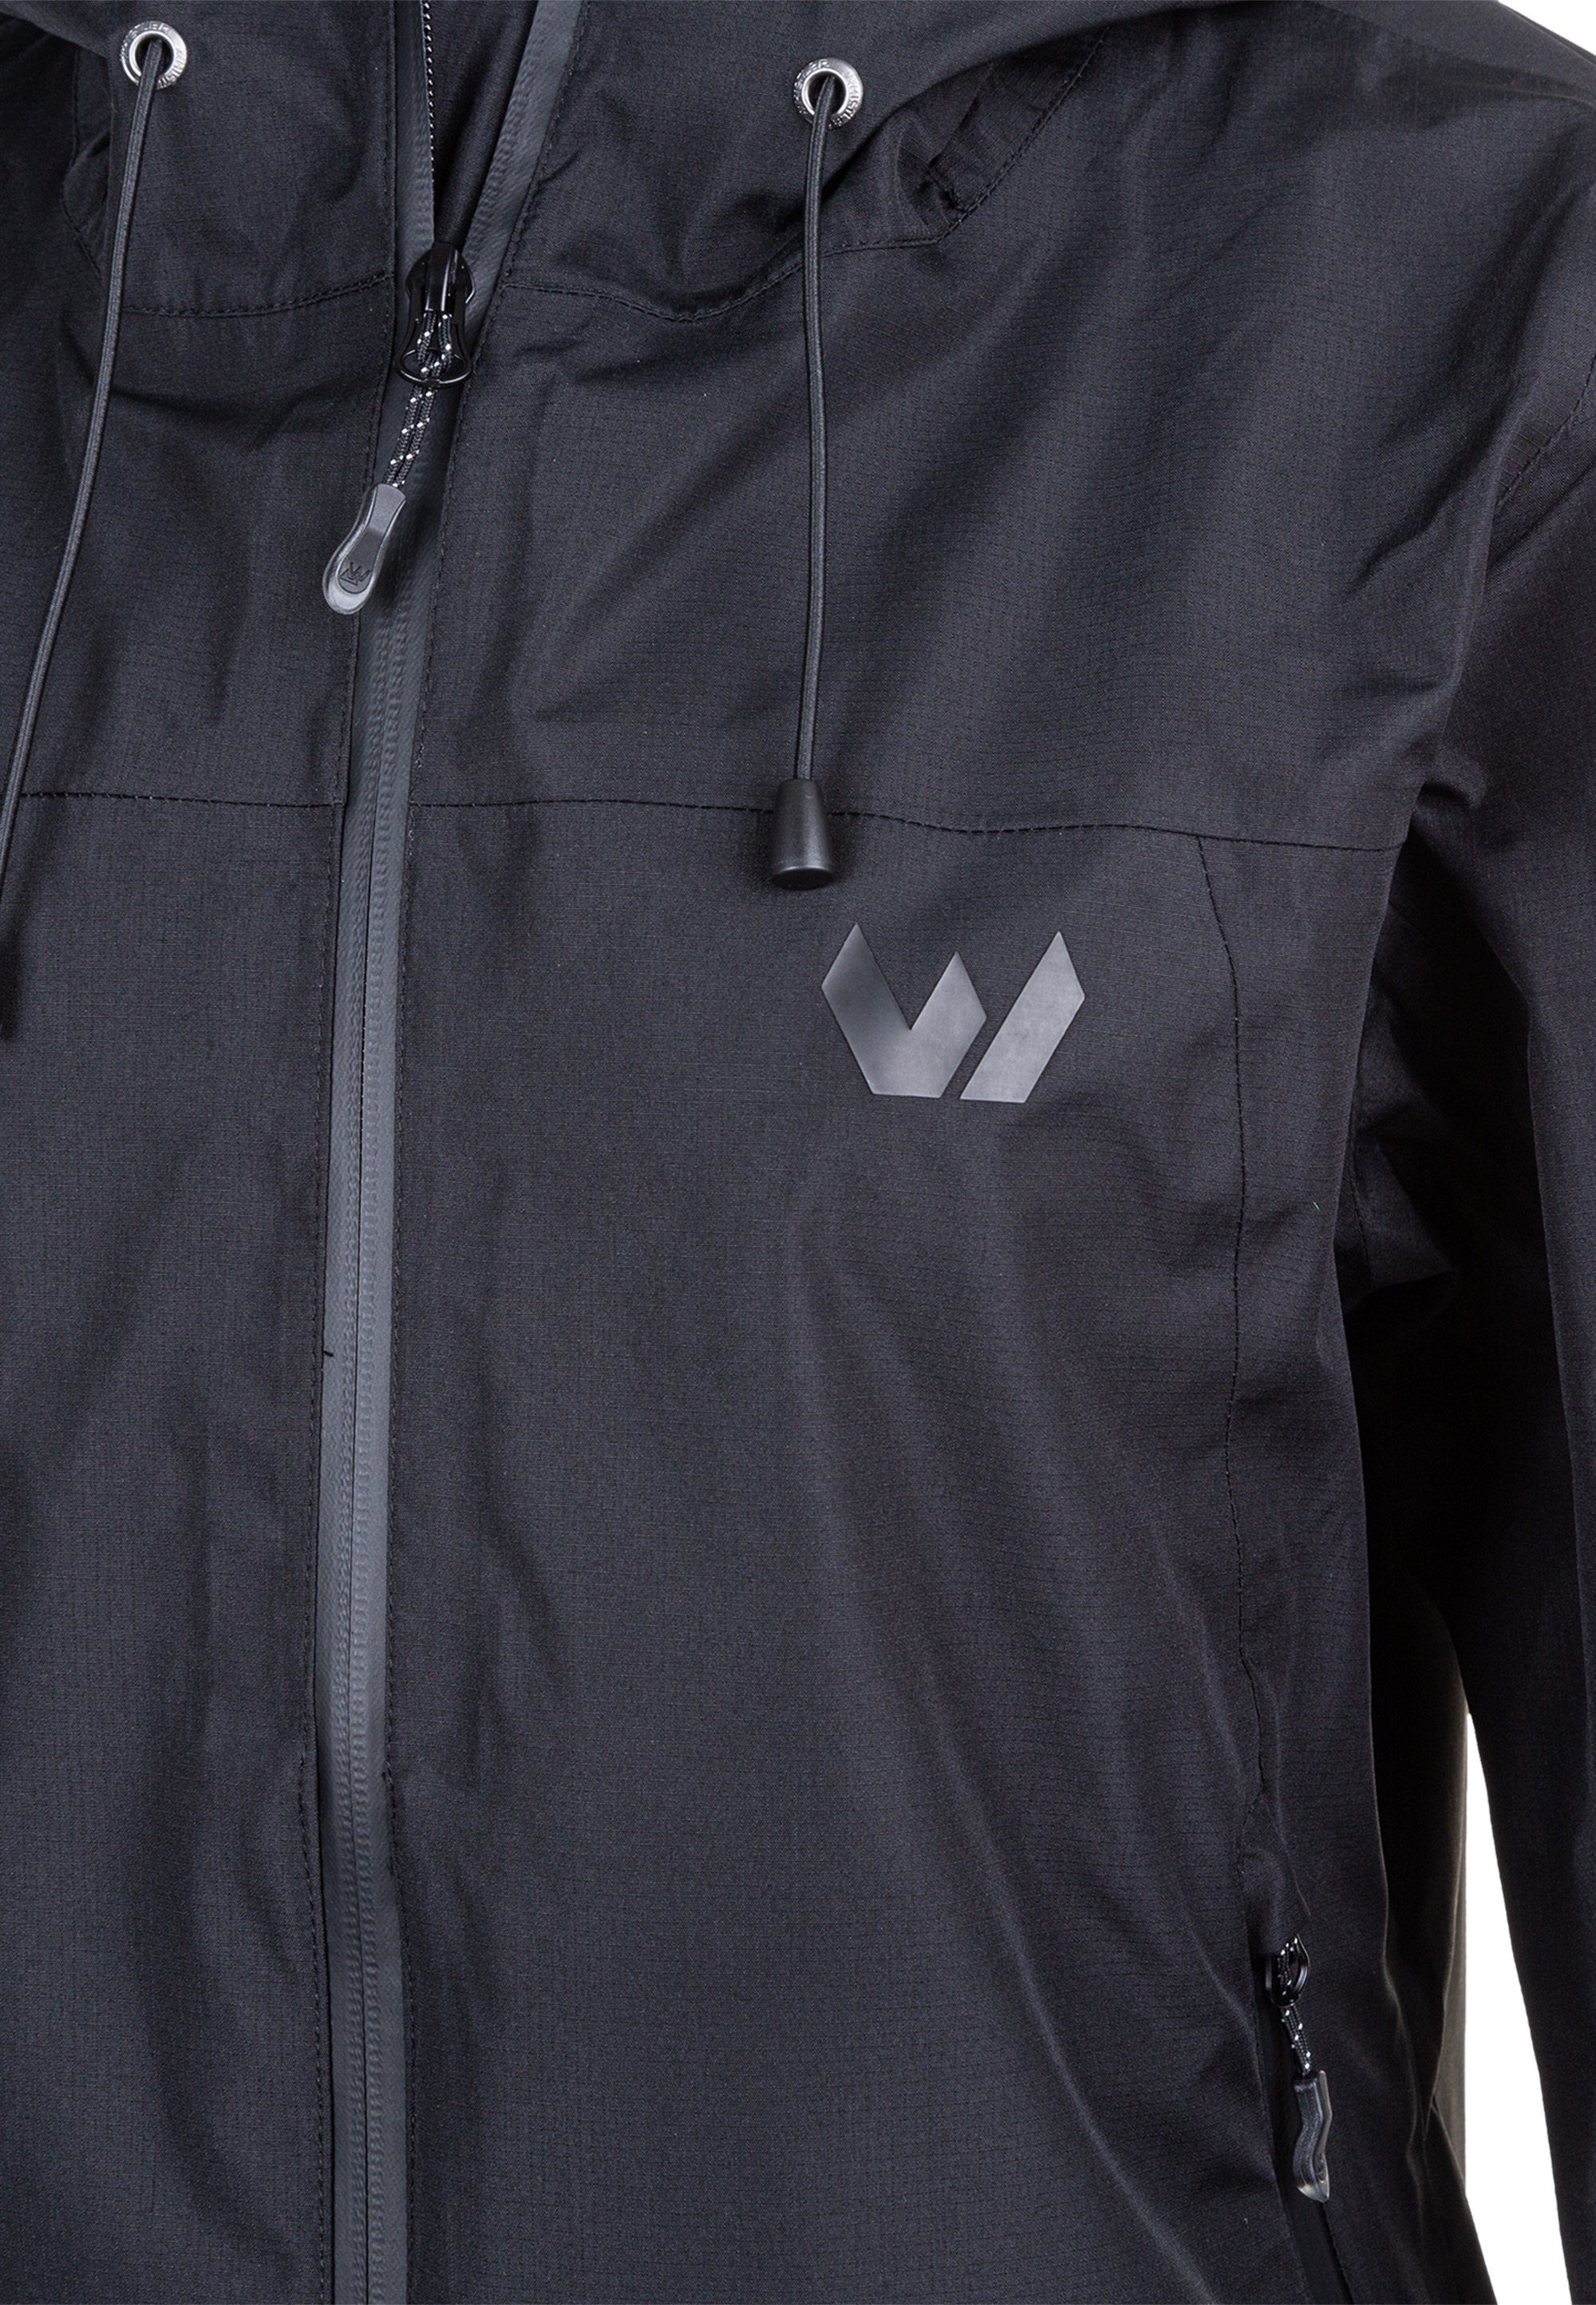 WHISTLER Softshelljacke BROOK W Shell mit W-PRO Jacket Kapuze schwarz praktischer 15000